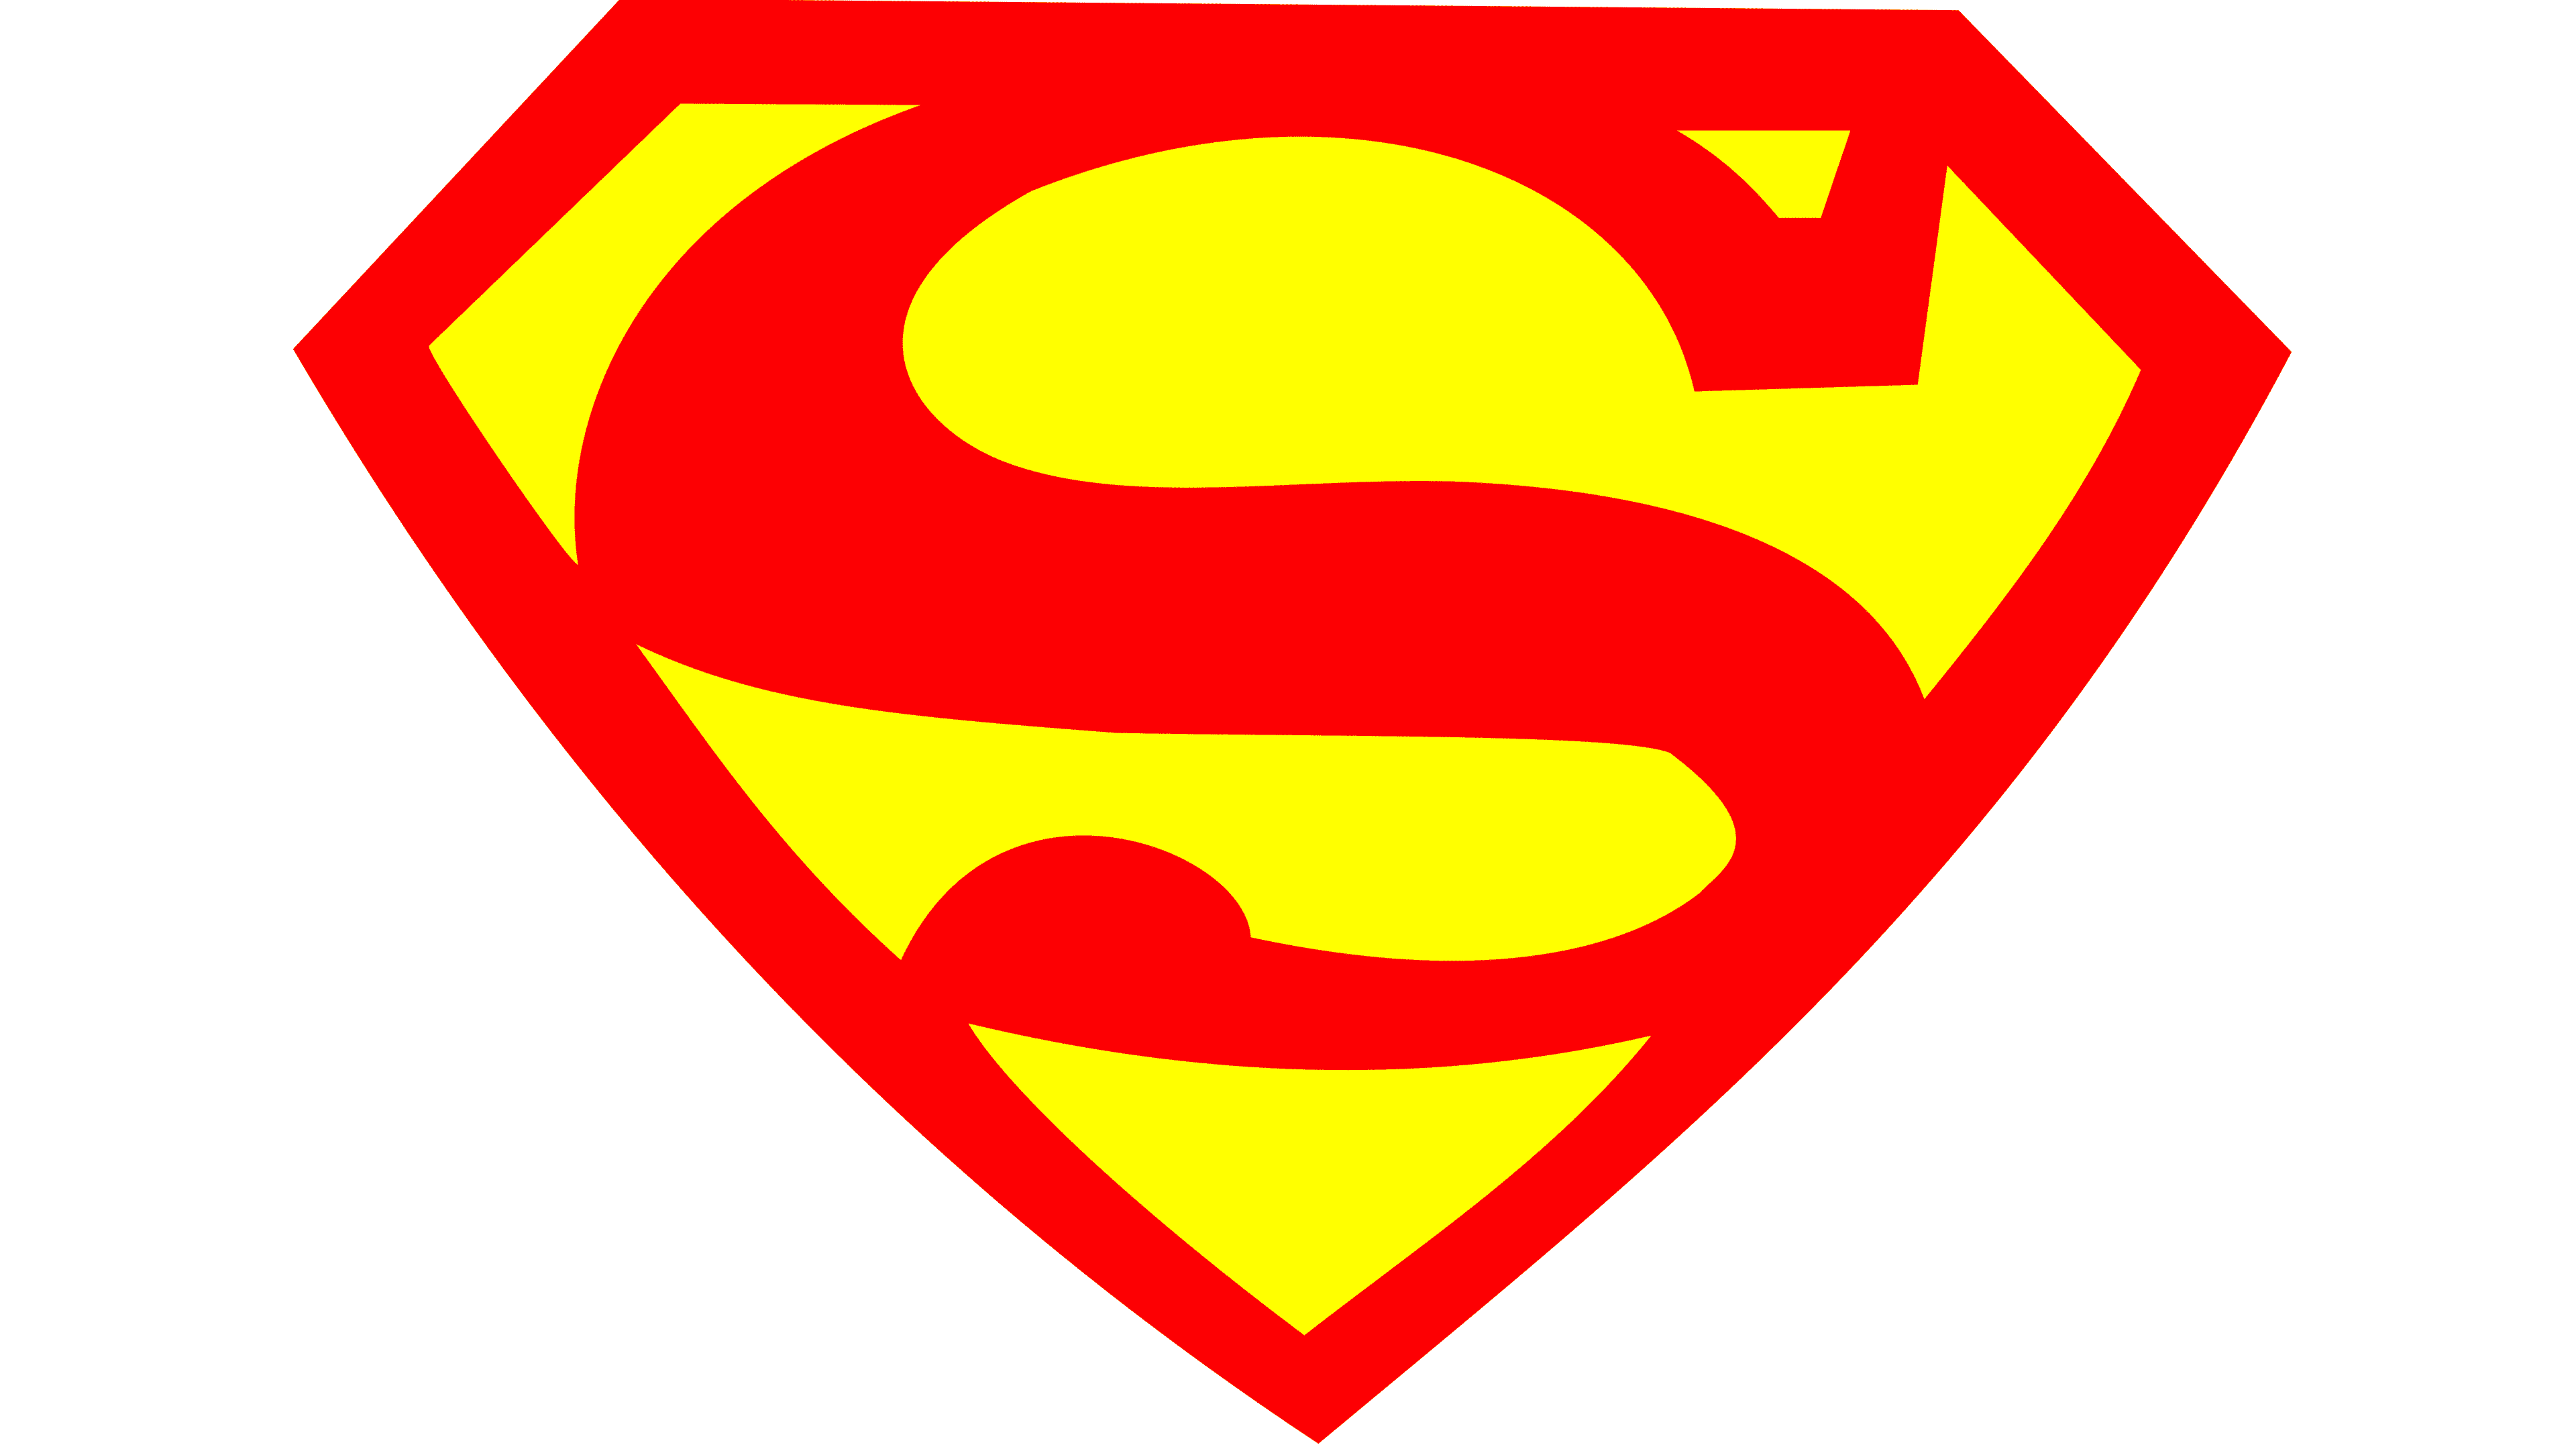 superman logo hd png